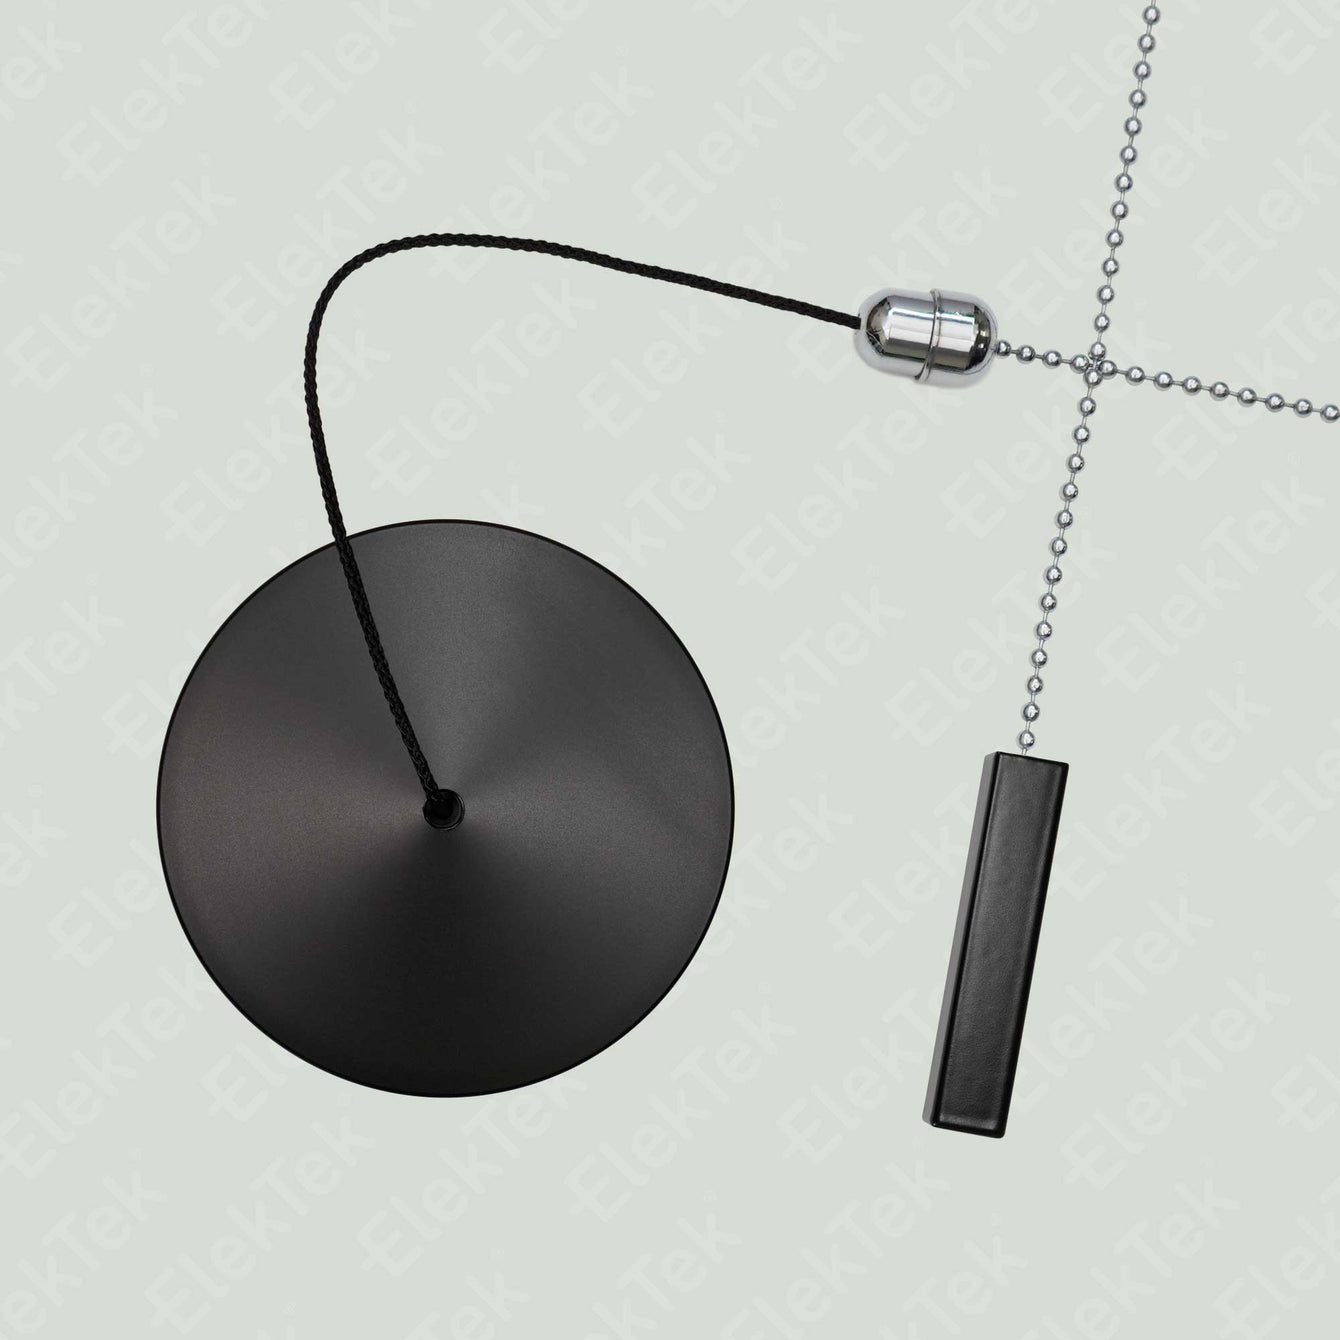 ElekTek Premium Matt Black Bathroom Light Pull Cord Switch Kit with Pull Chain Handle Black Square Bar / Black